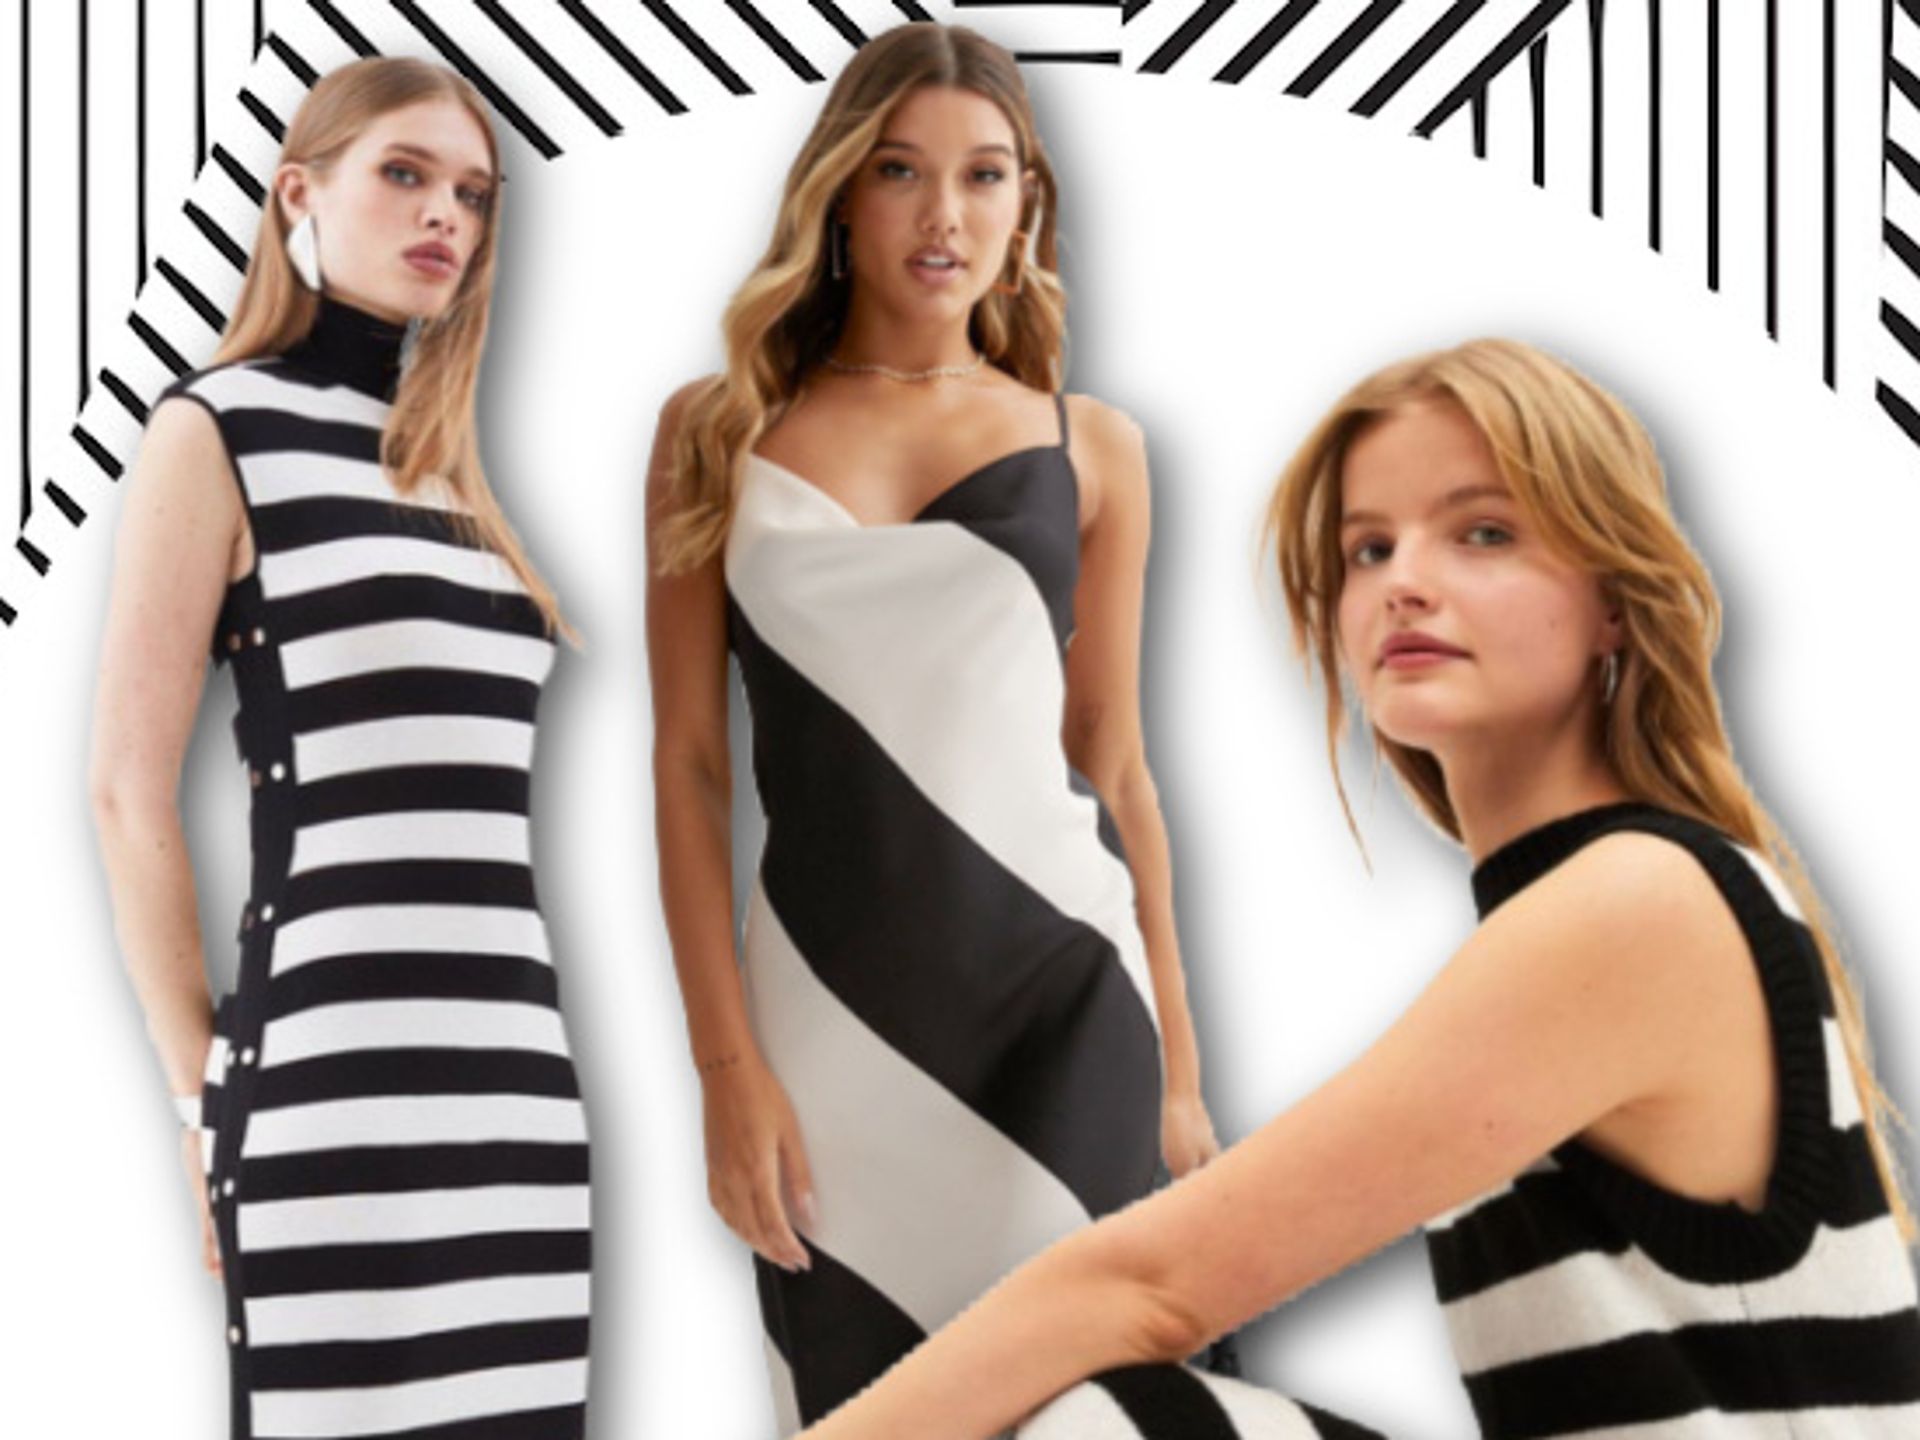 Shop Meghan Markle's black-and-white striped Posse dress